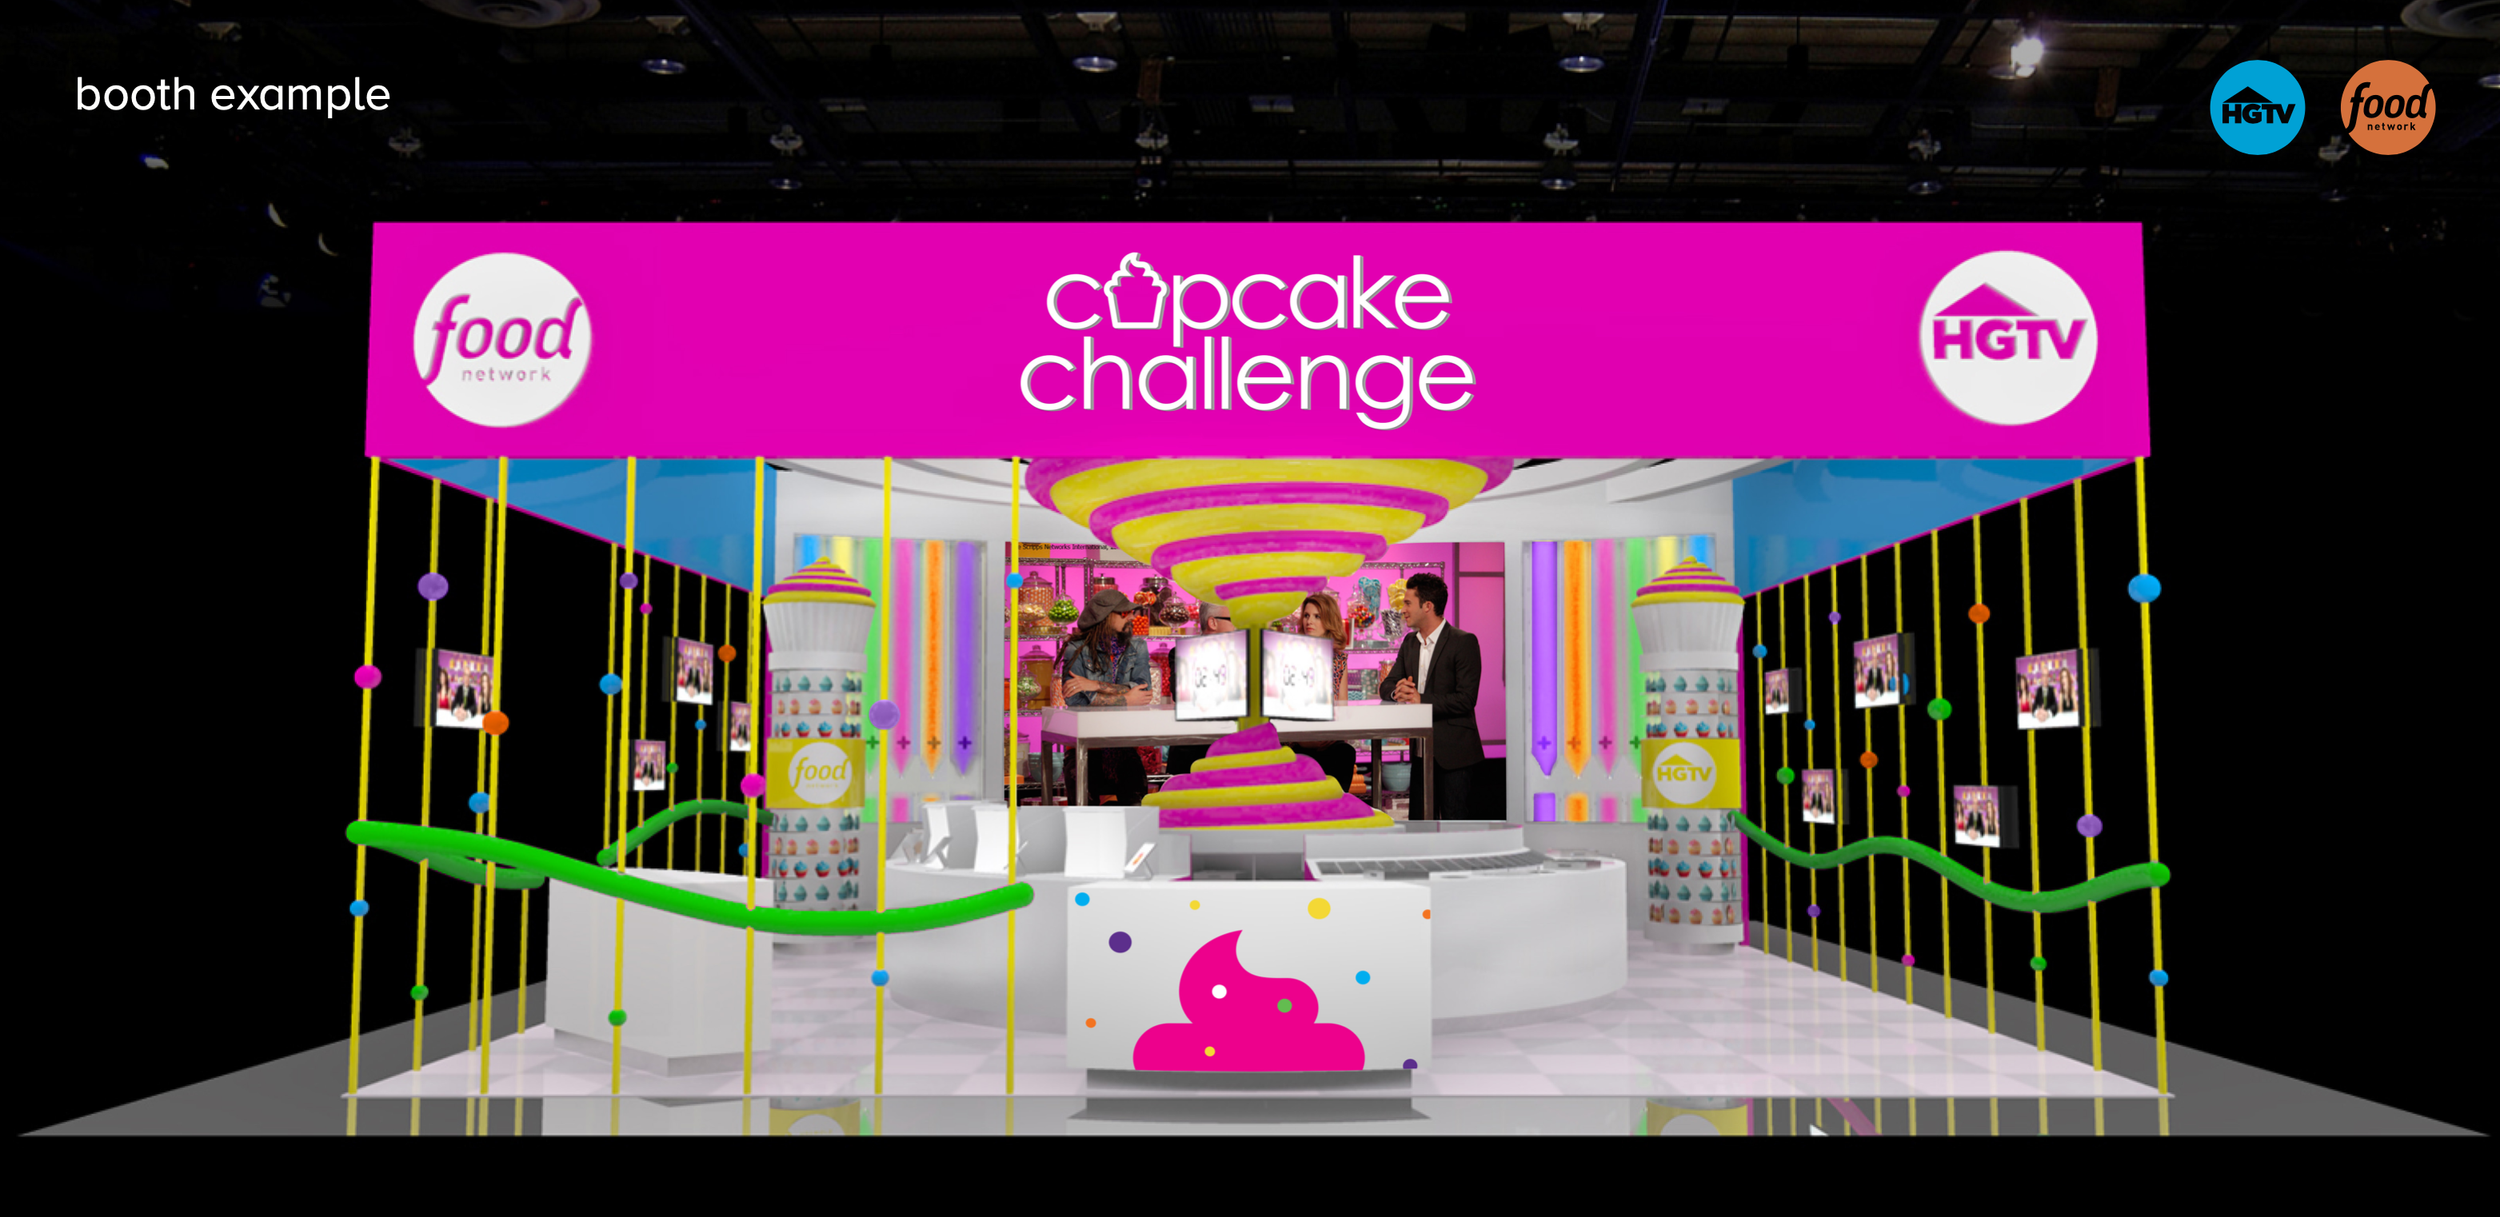 Food Network's Cupcake Challenge